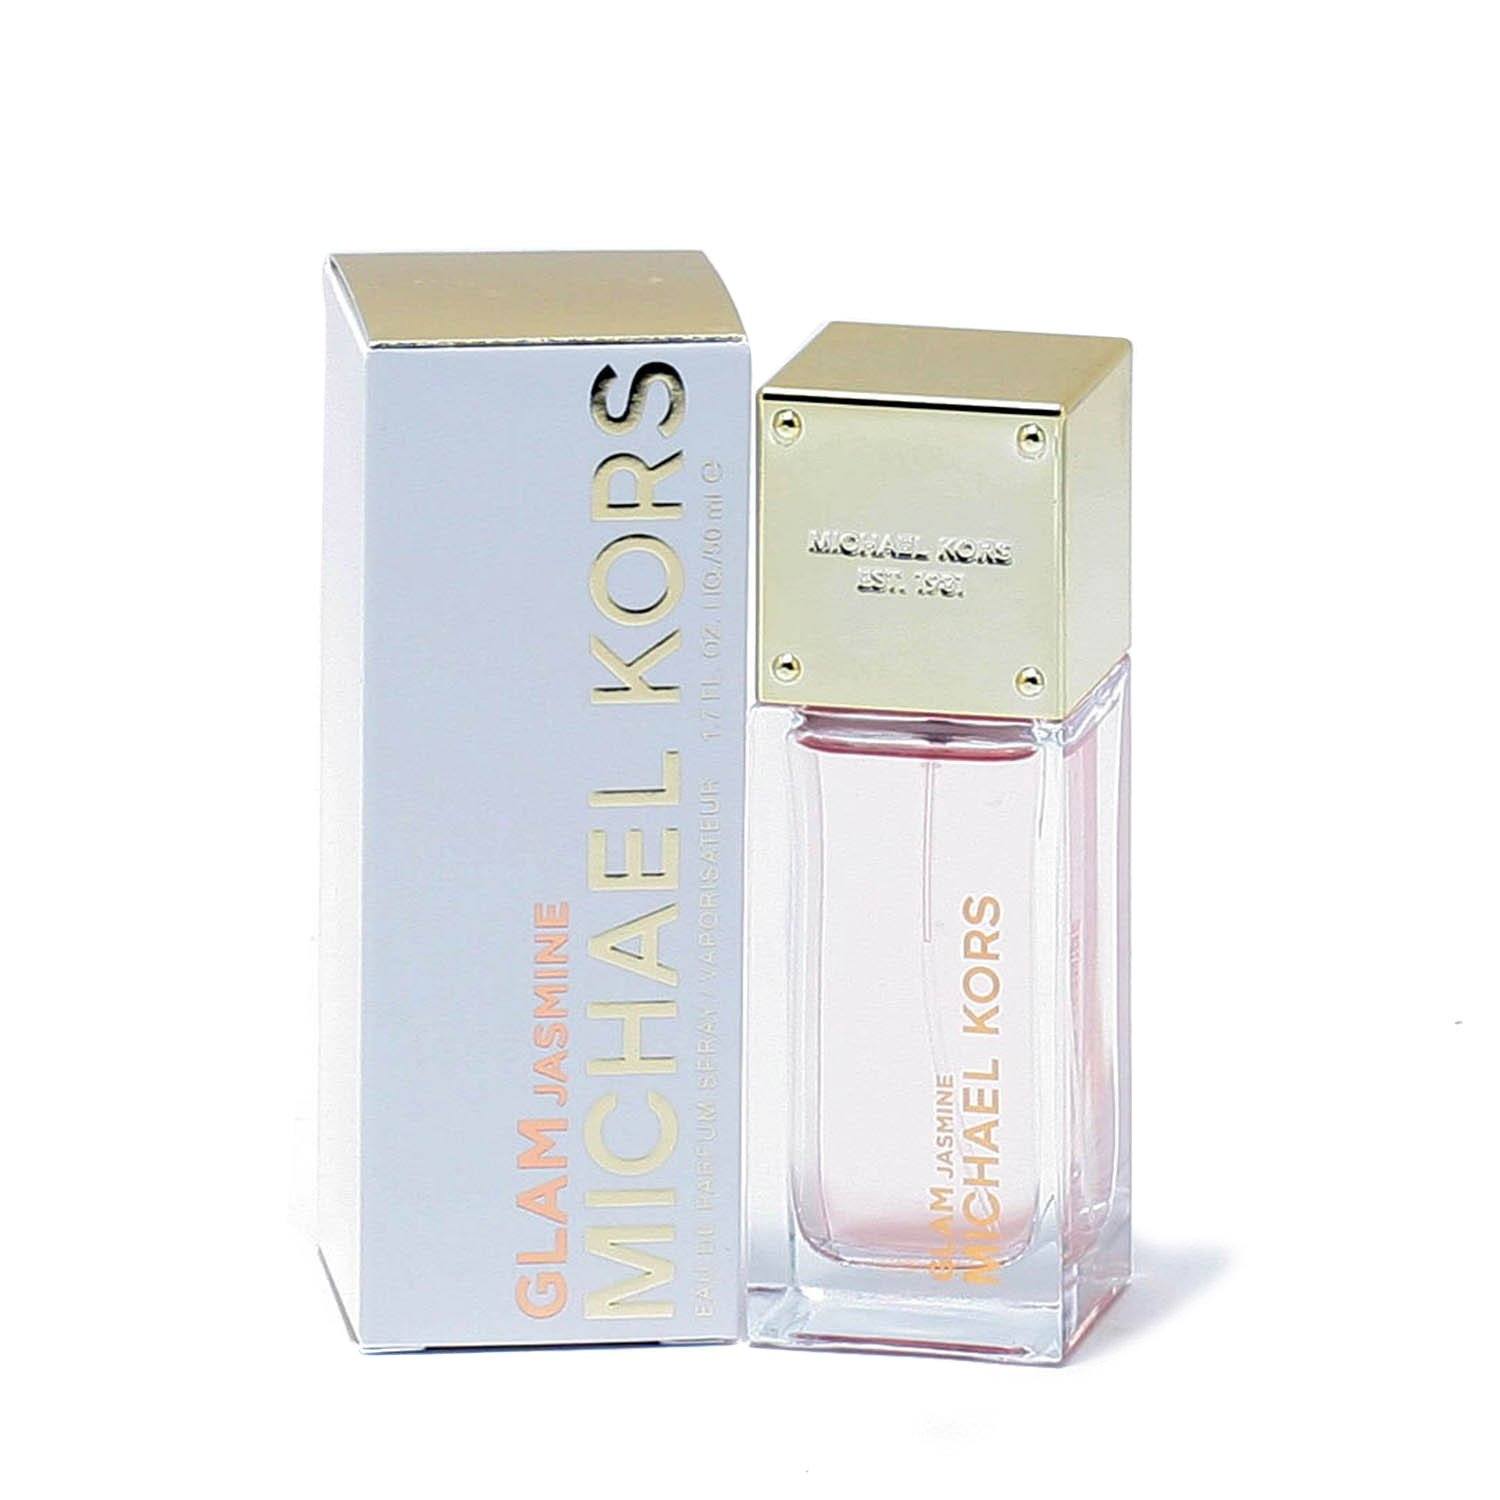 Perfume - MICHAEL KORS GLAM JASMINE FOR WOMEN - EAU DE PARFUM SPRAY